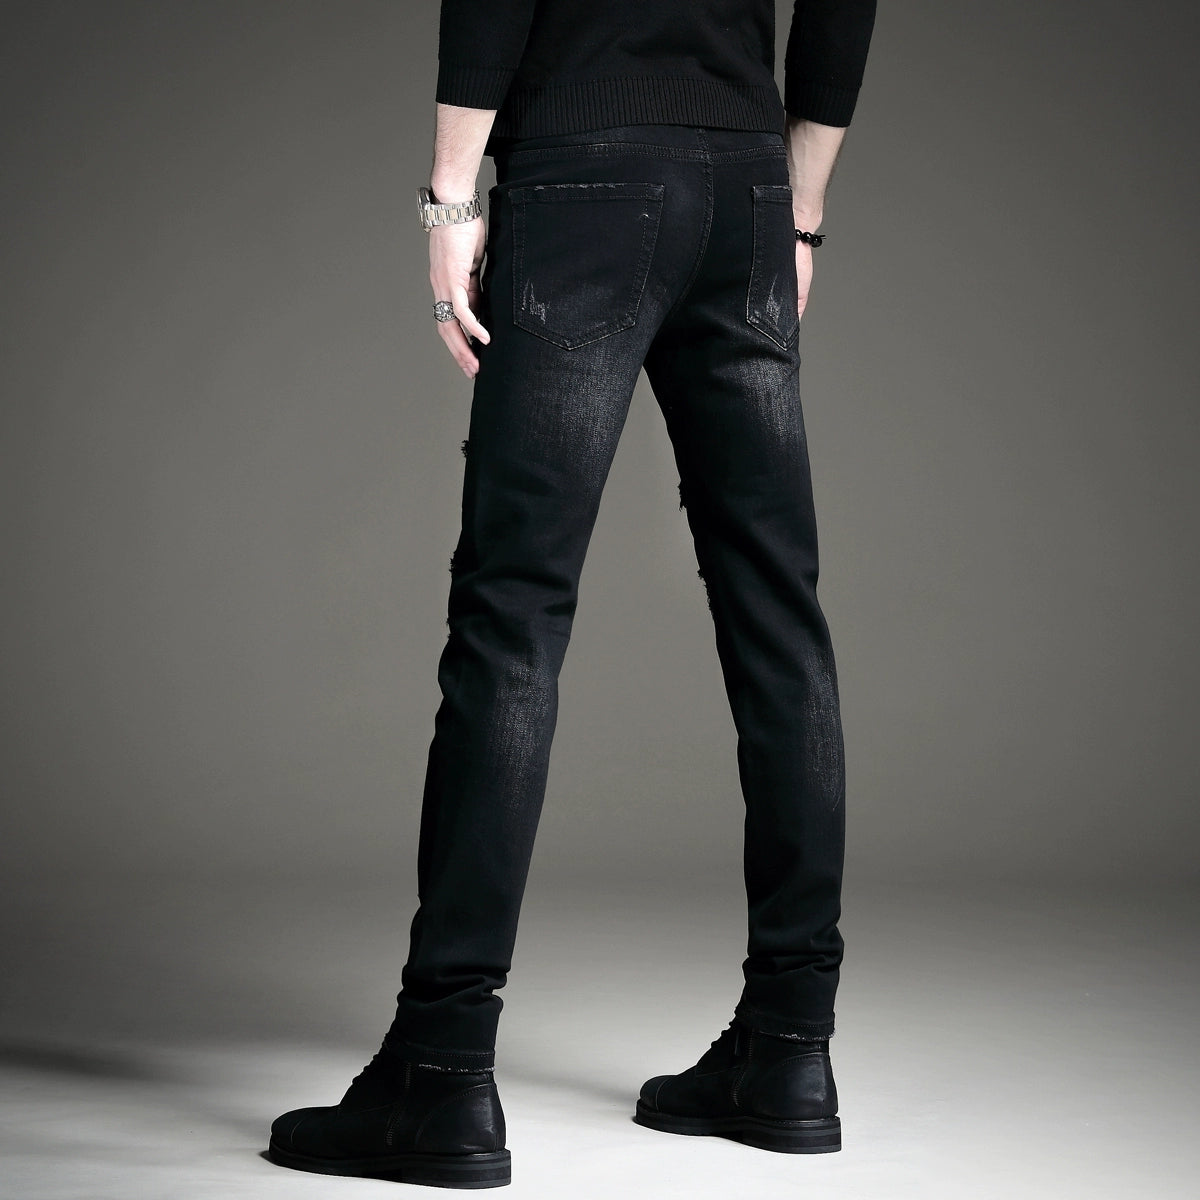 Men's Black Slim-Fit Ripped Jeans for Summer